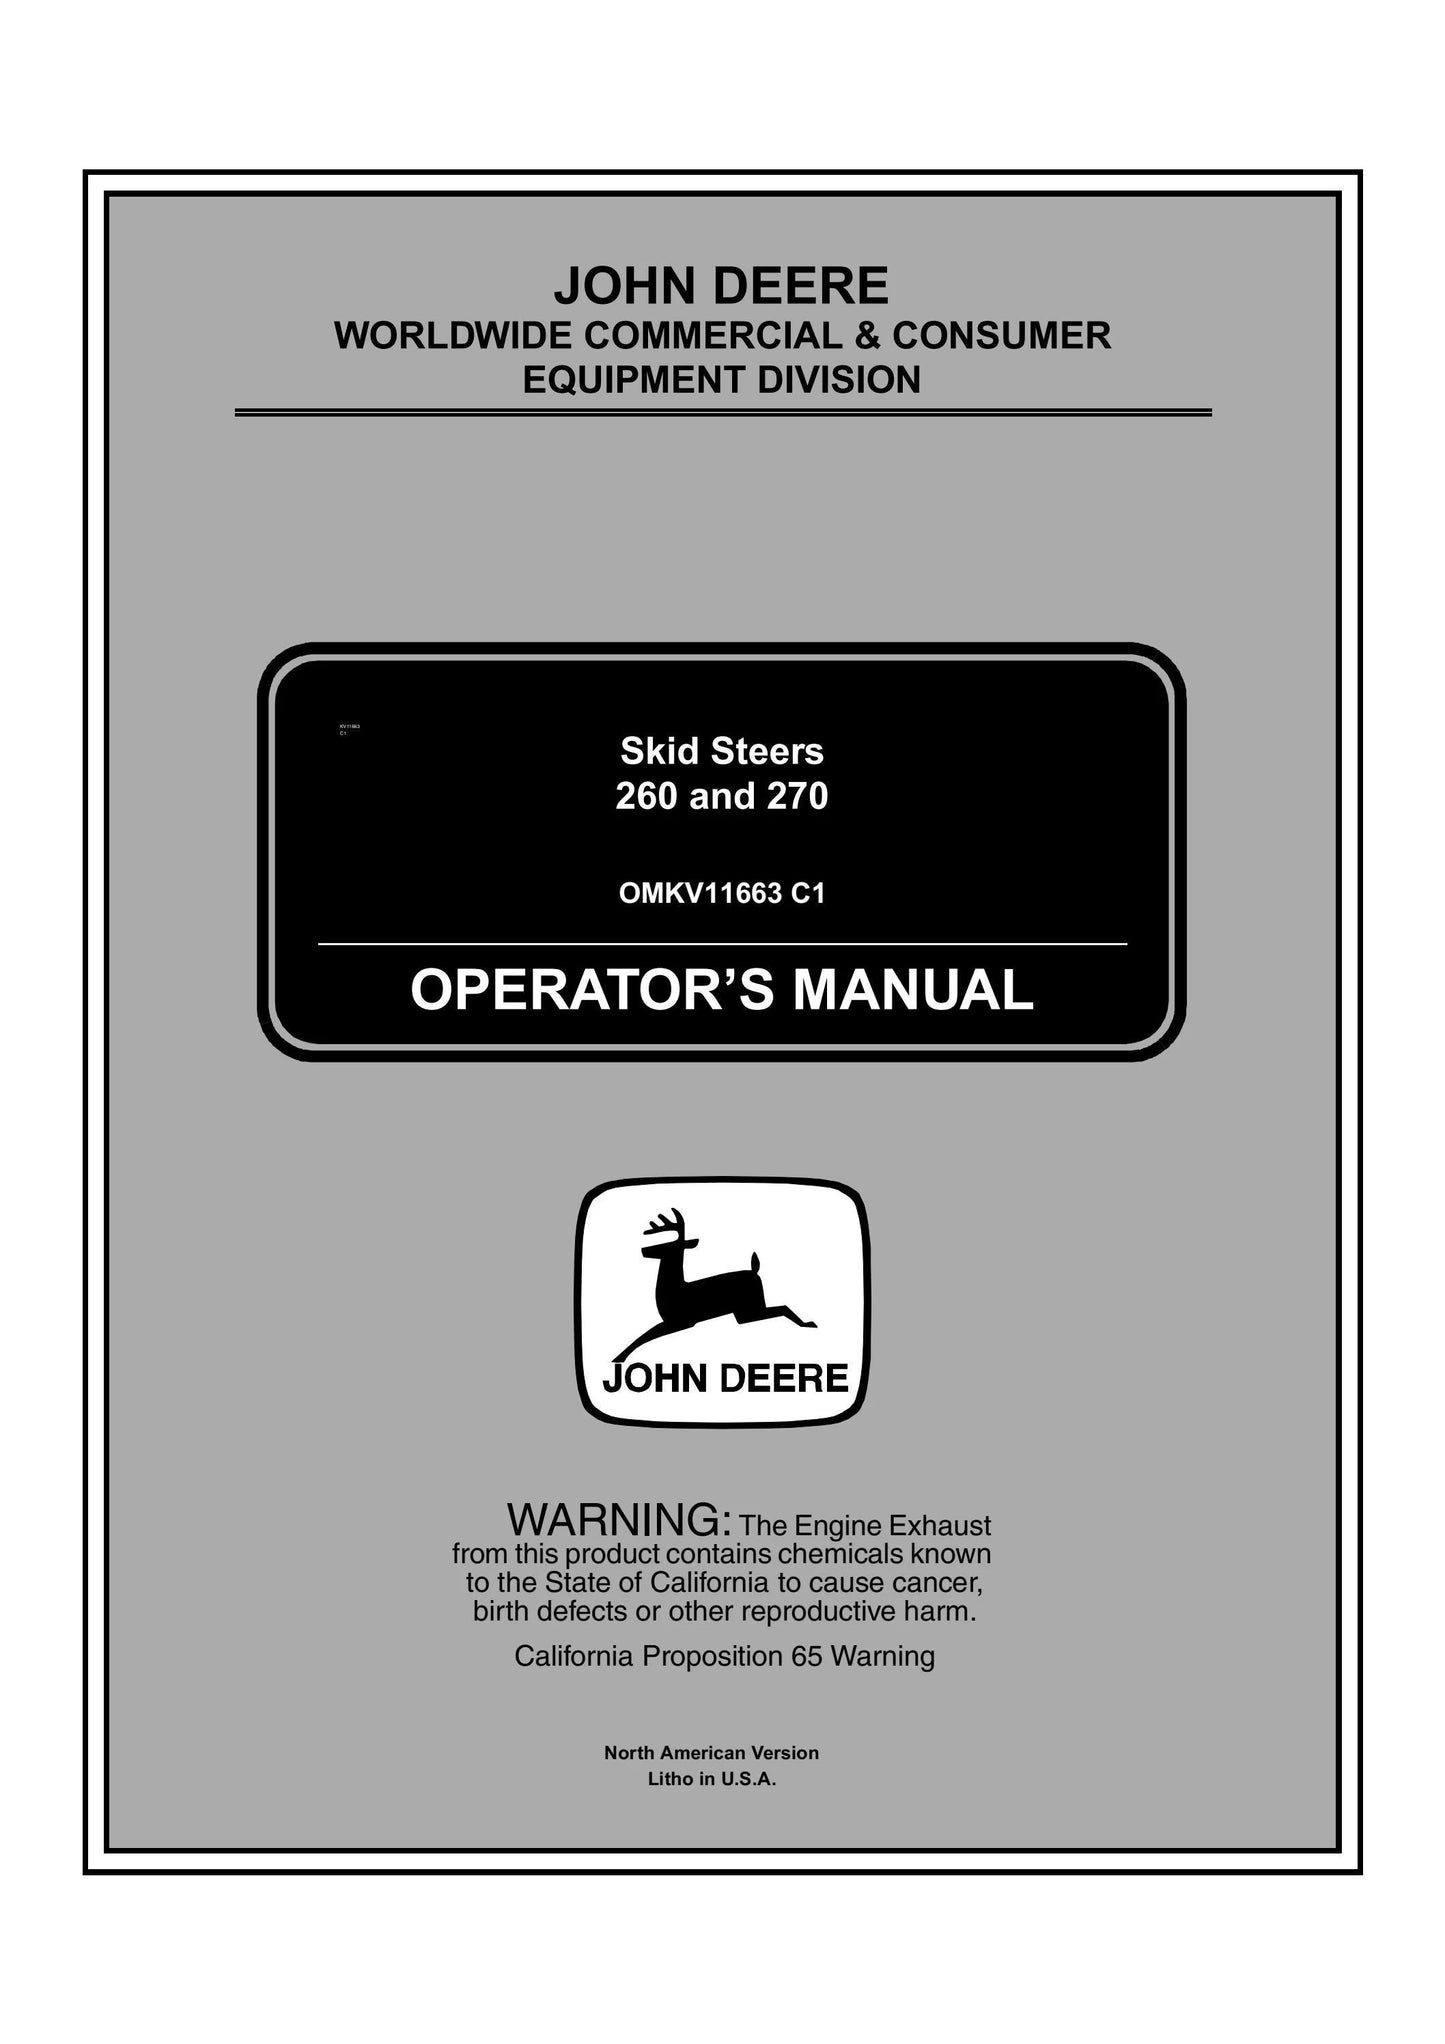 John Deere 260 and 270 Skid Steers Operator’s Manual OMKV11663 - PDF